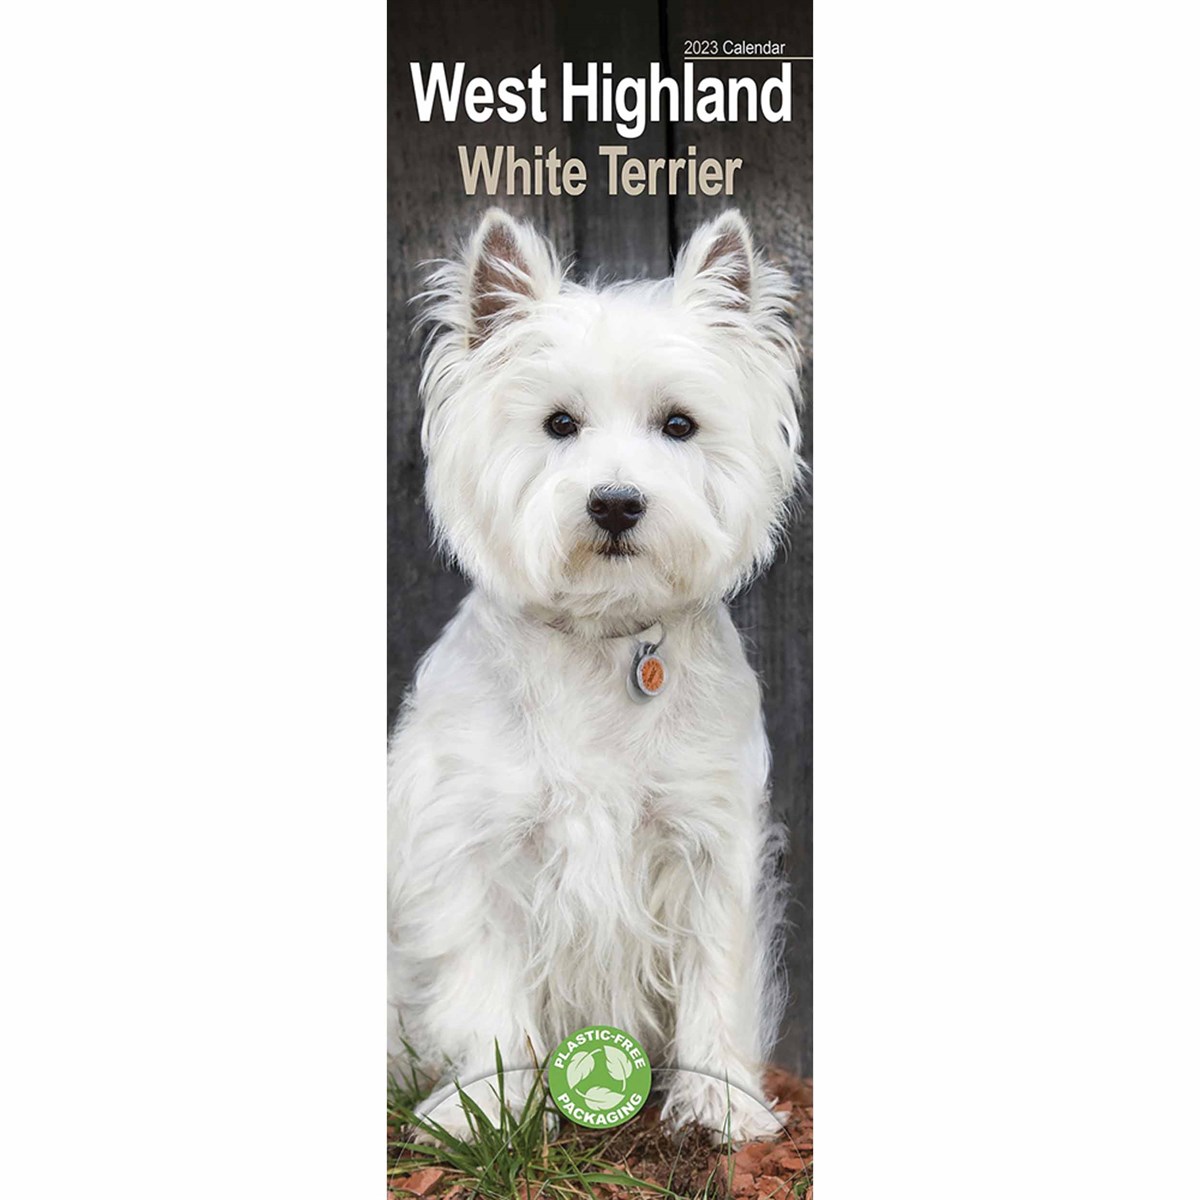 West Highland White Terrier Slim 2023 Calendars